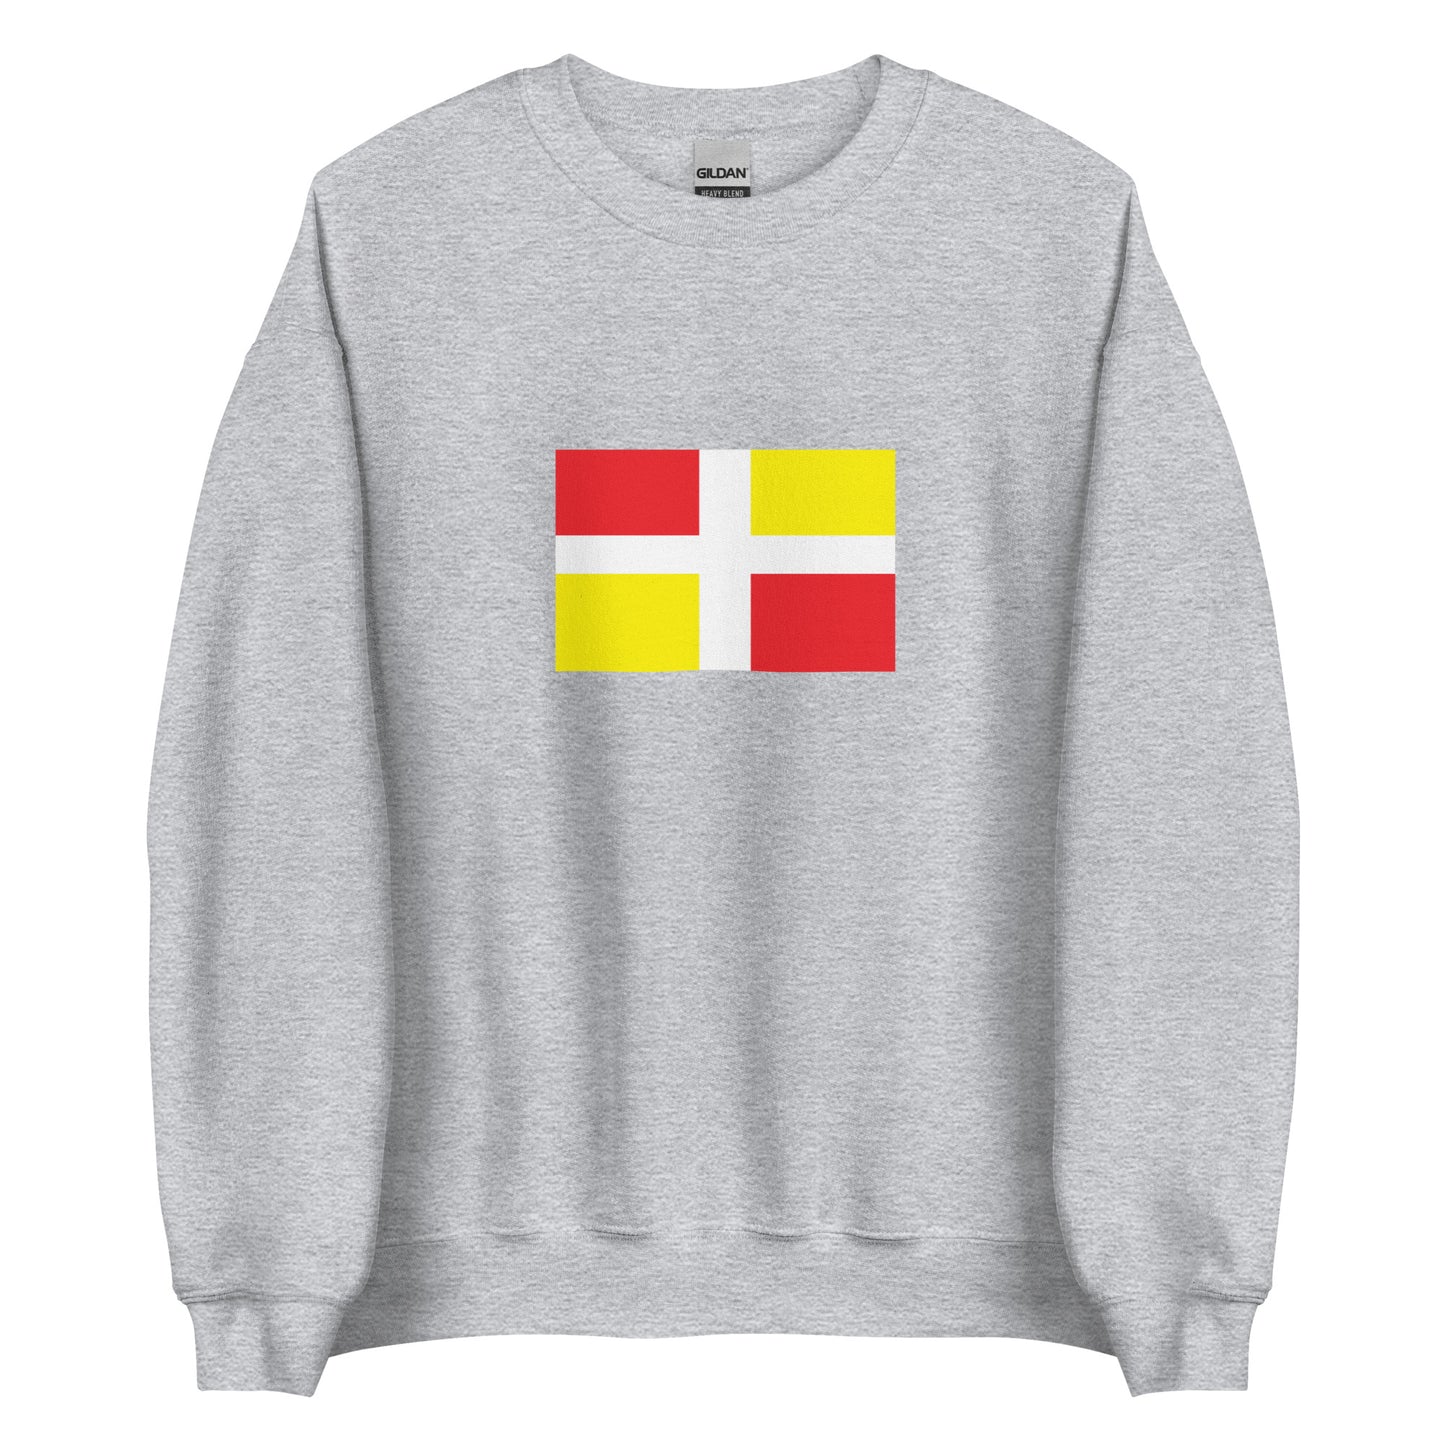 Portugal - Mirandese people | Ethnic Portugal Flag Interactive Sweatshirt